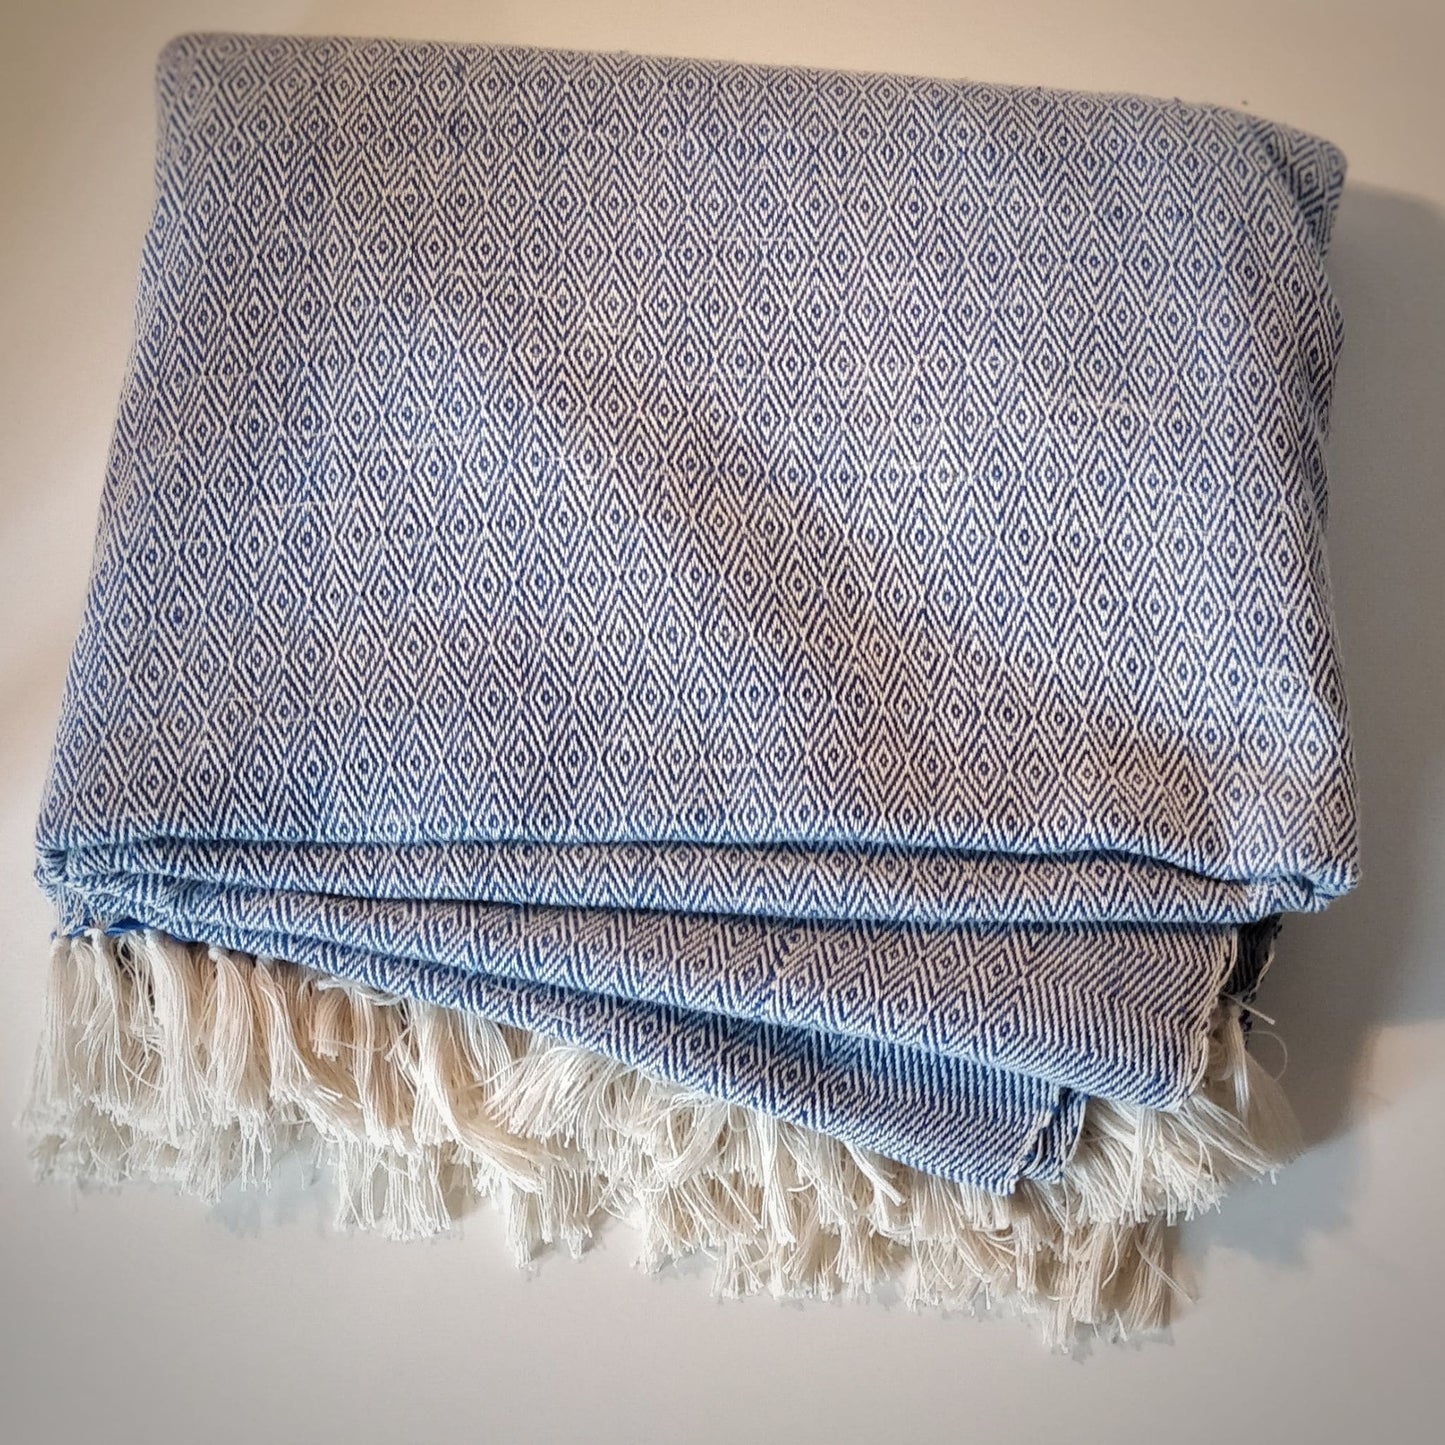 Hand woven blanket - blue